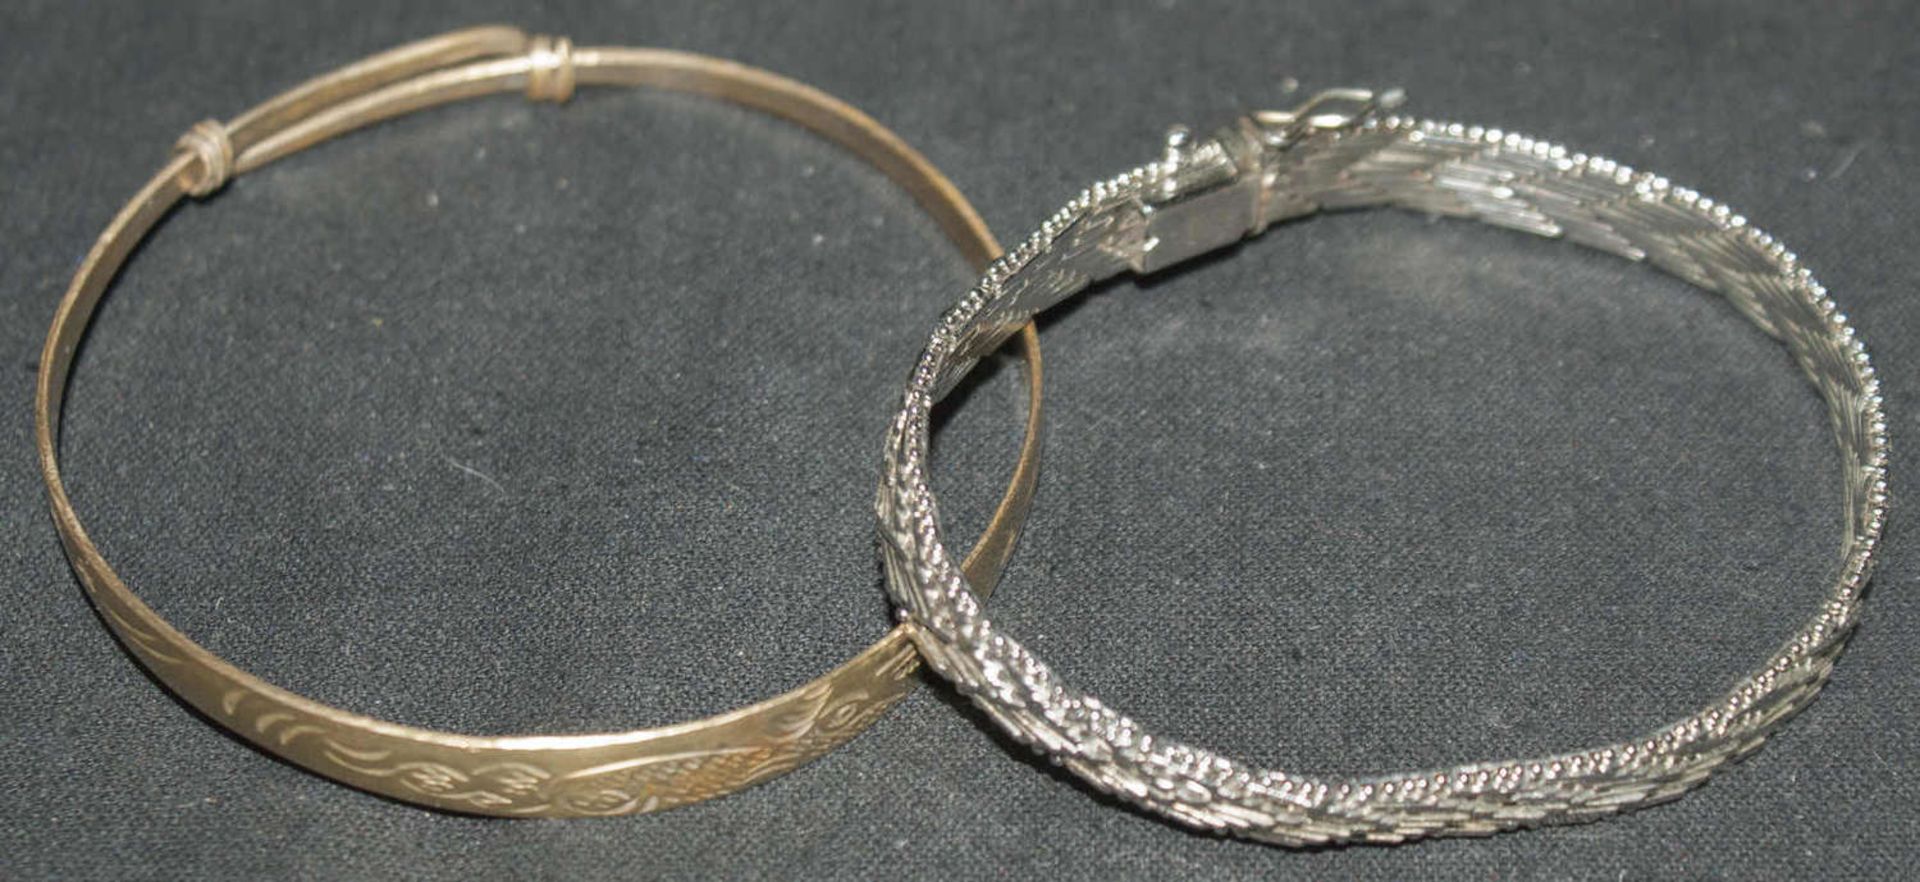 1 Armreif Silber vergoldet, sowie 1 Armband in Silber. Gewicht ca. 28g.1 bangle silver plated, as